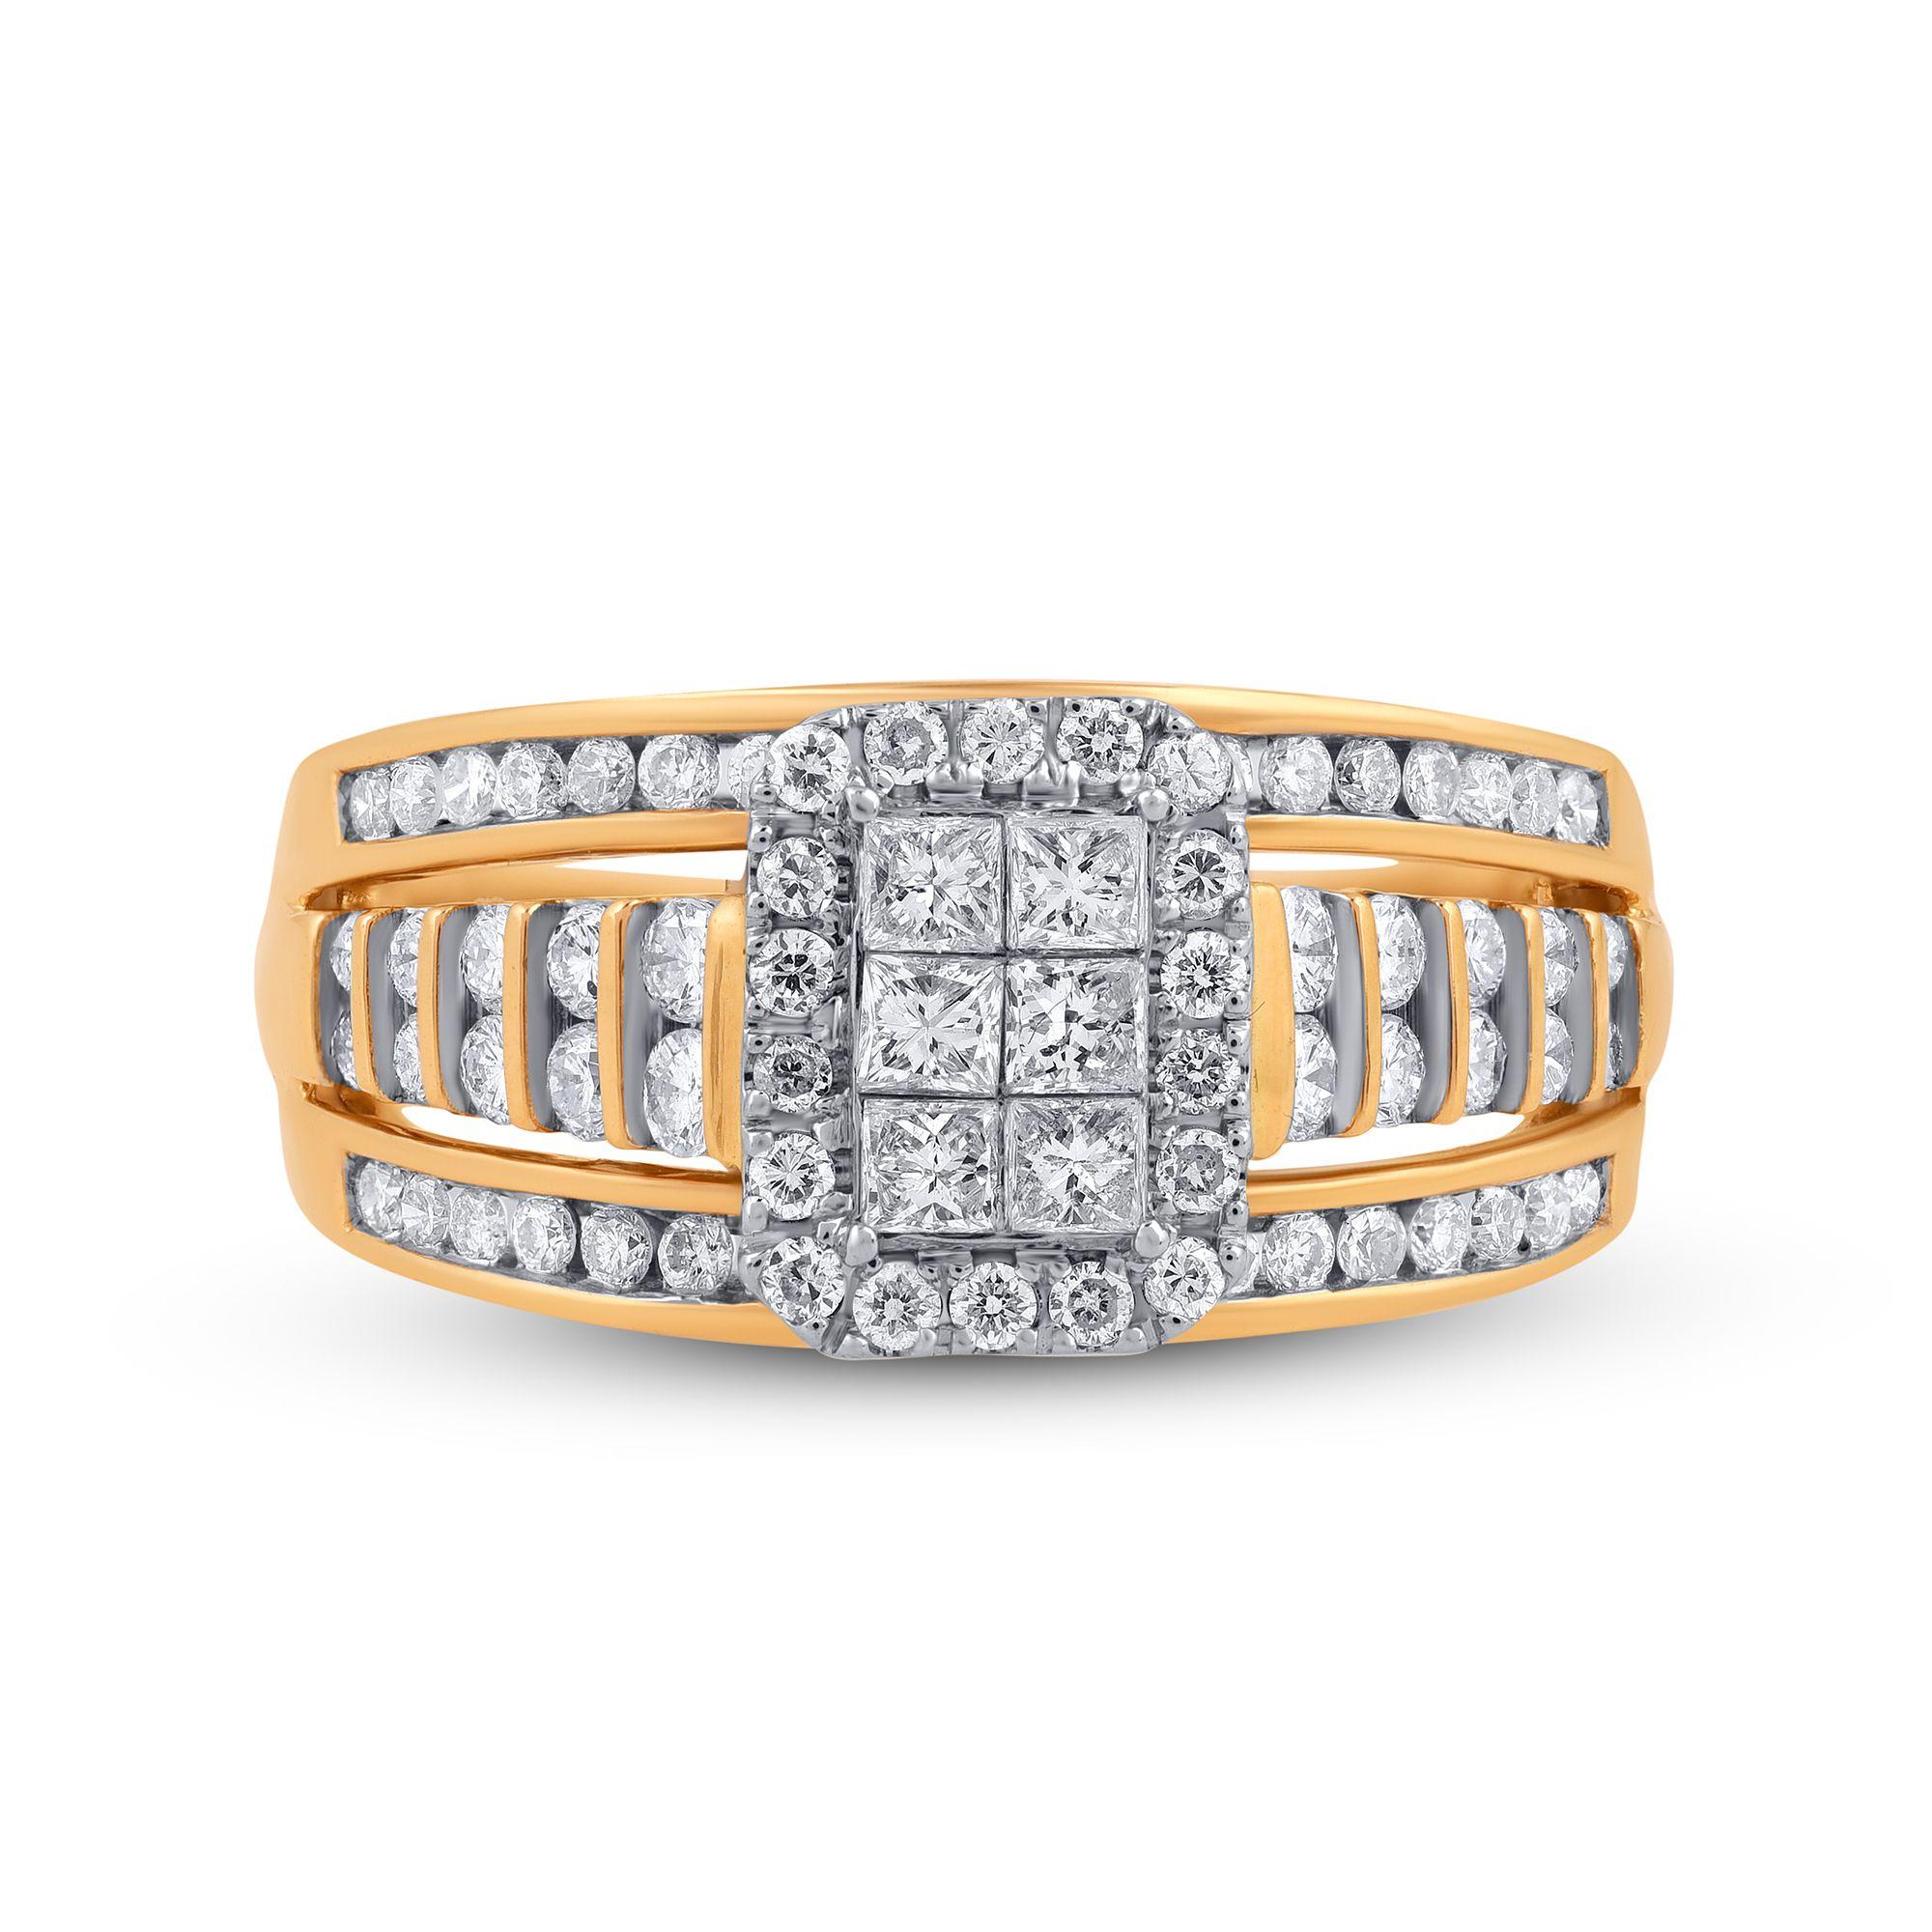 100 carat diamond ring